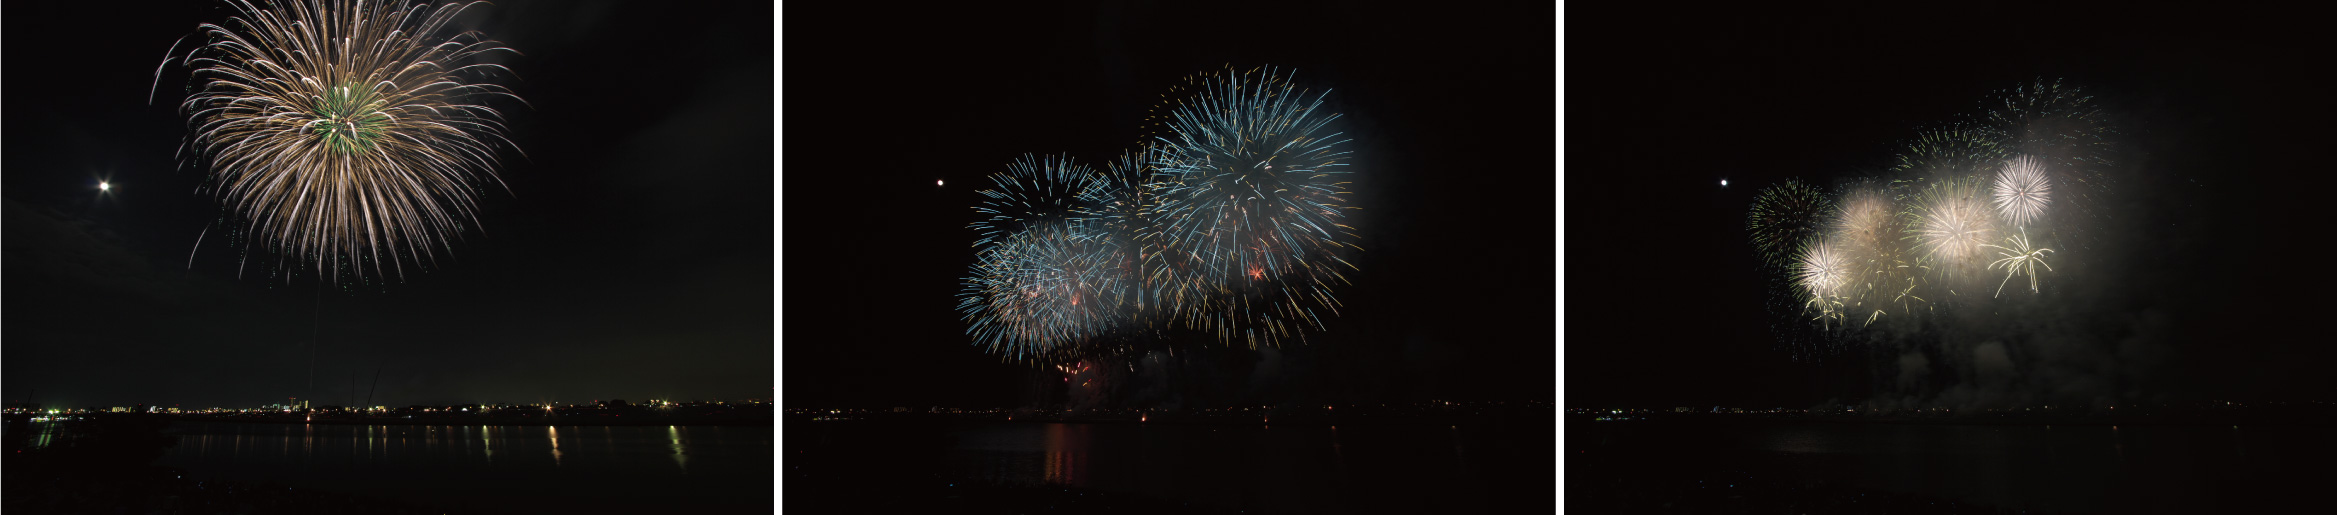 fireworks 2-1